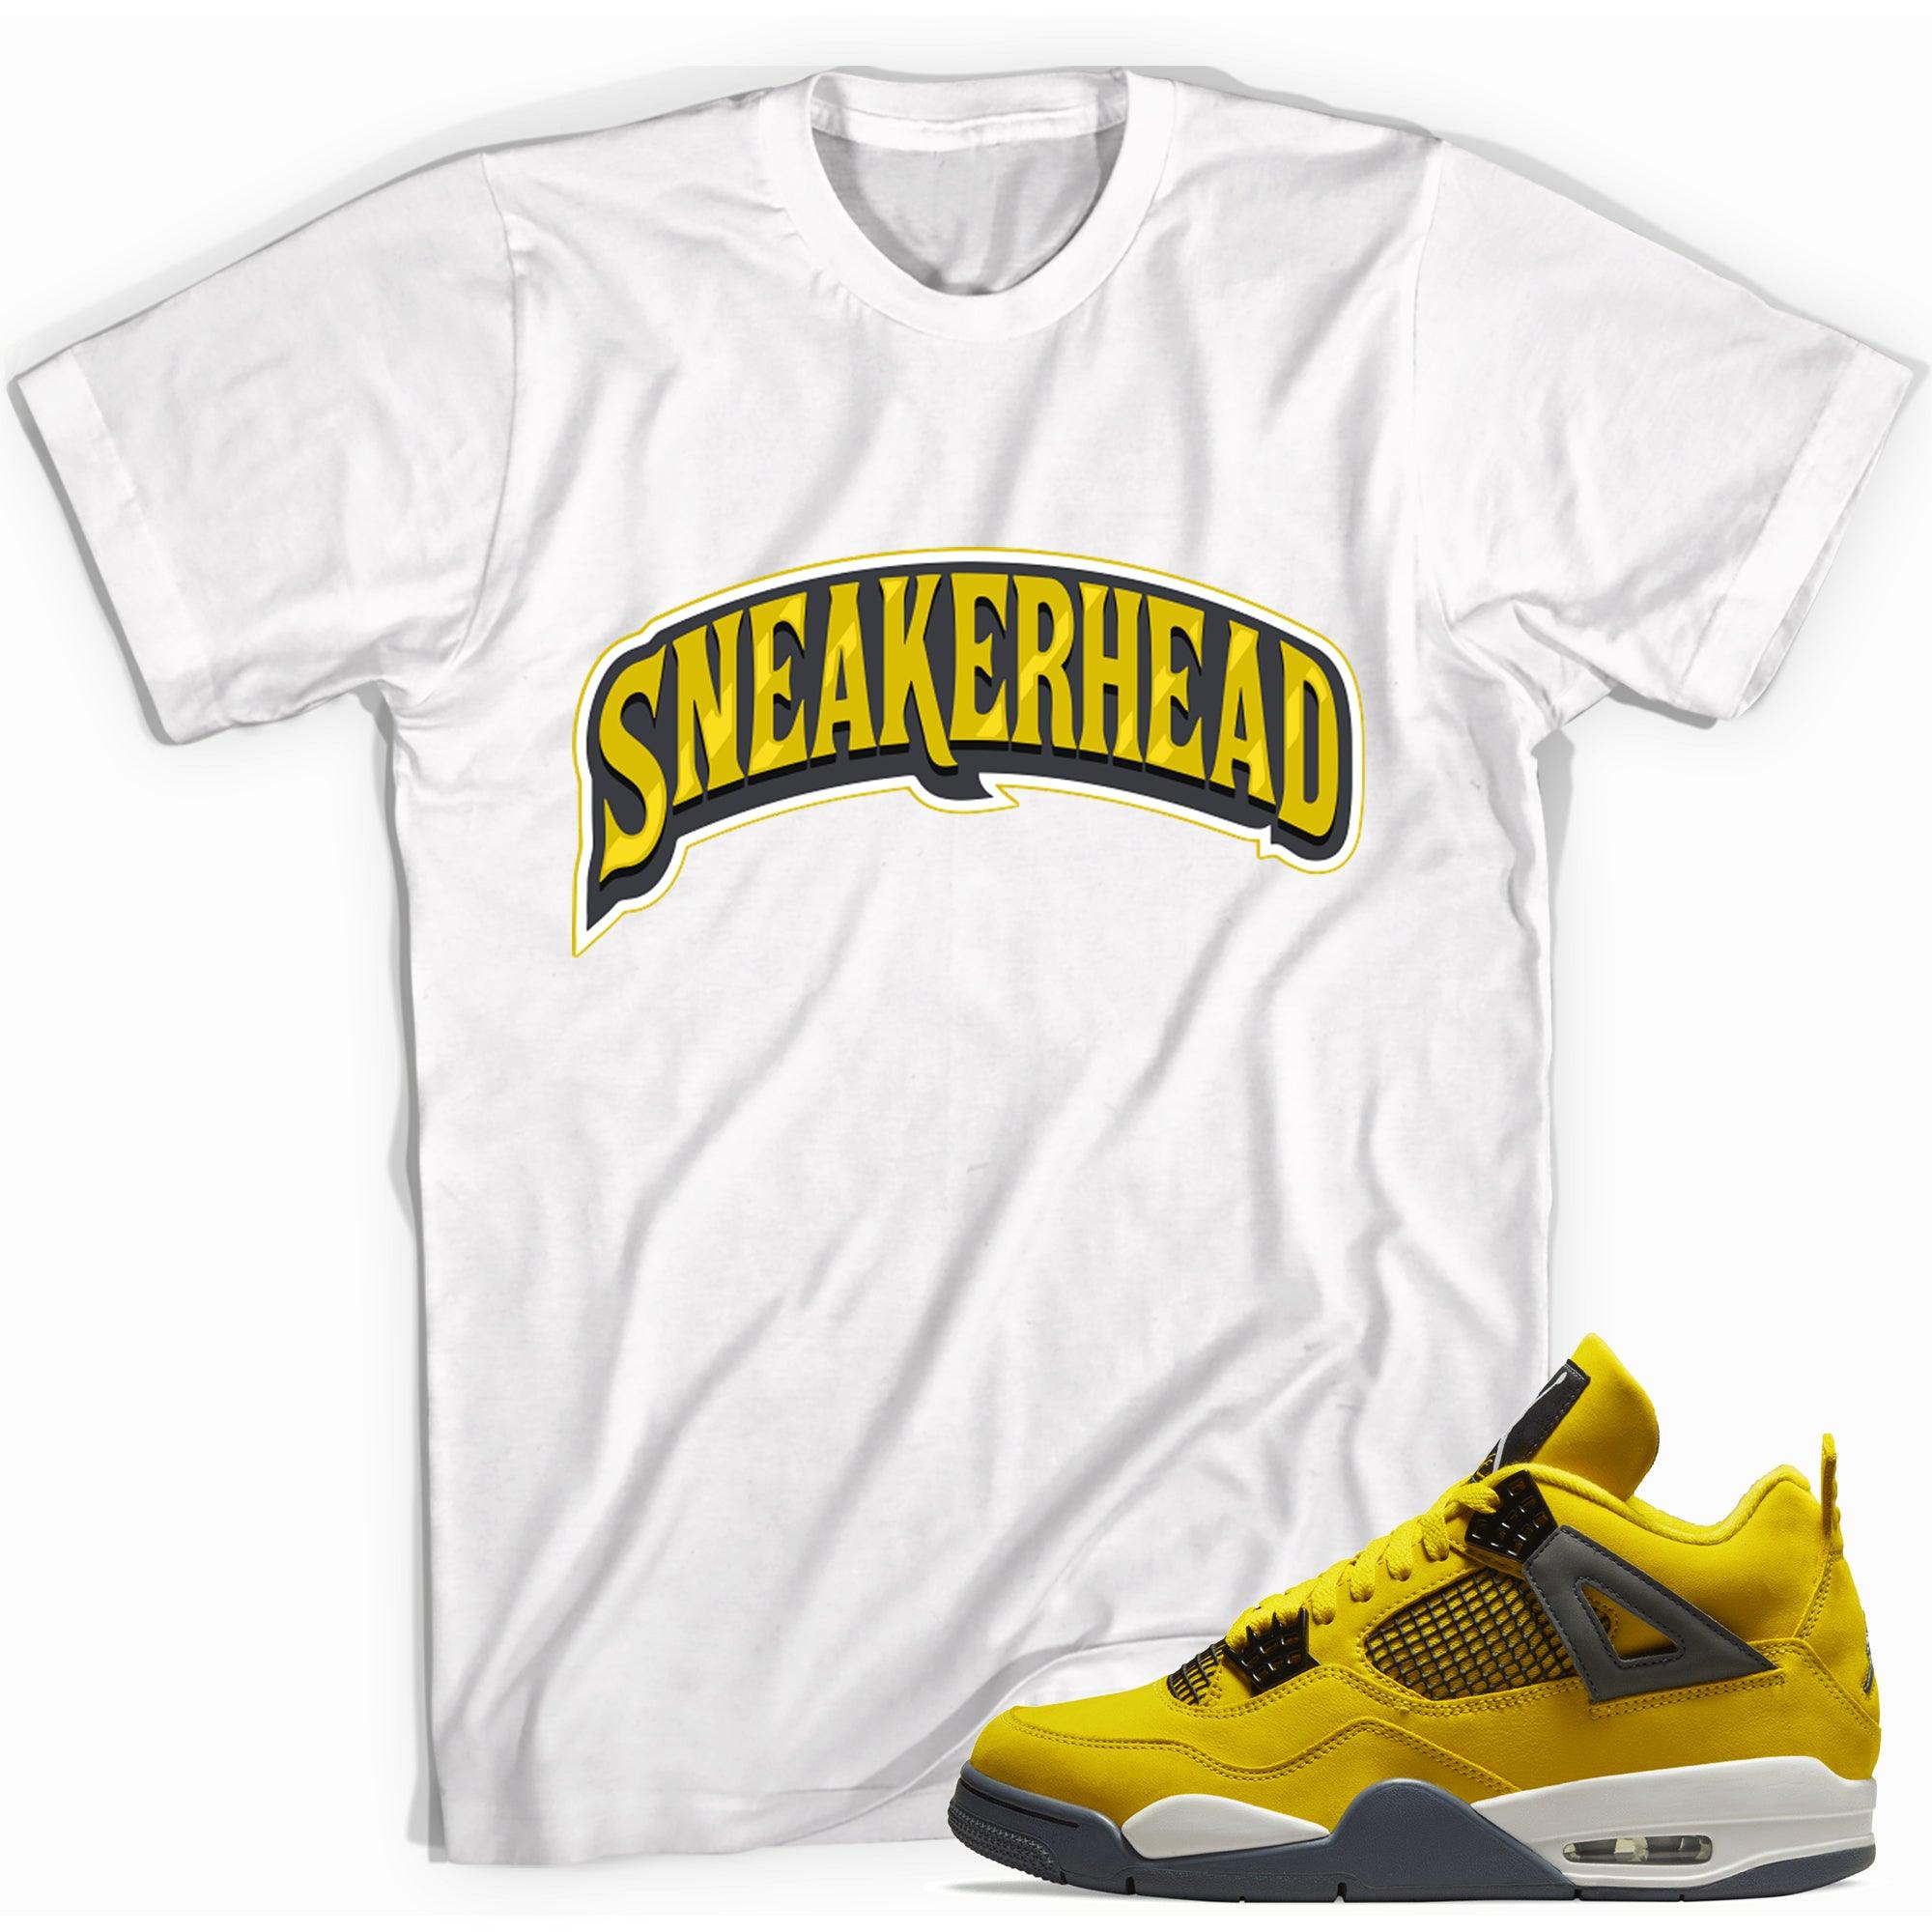 Sneakerhead Shirt AJ 4 Retro Lightning photo